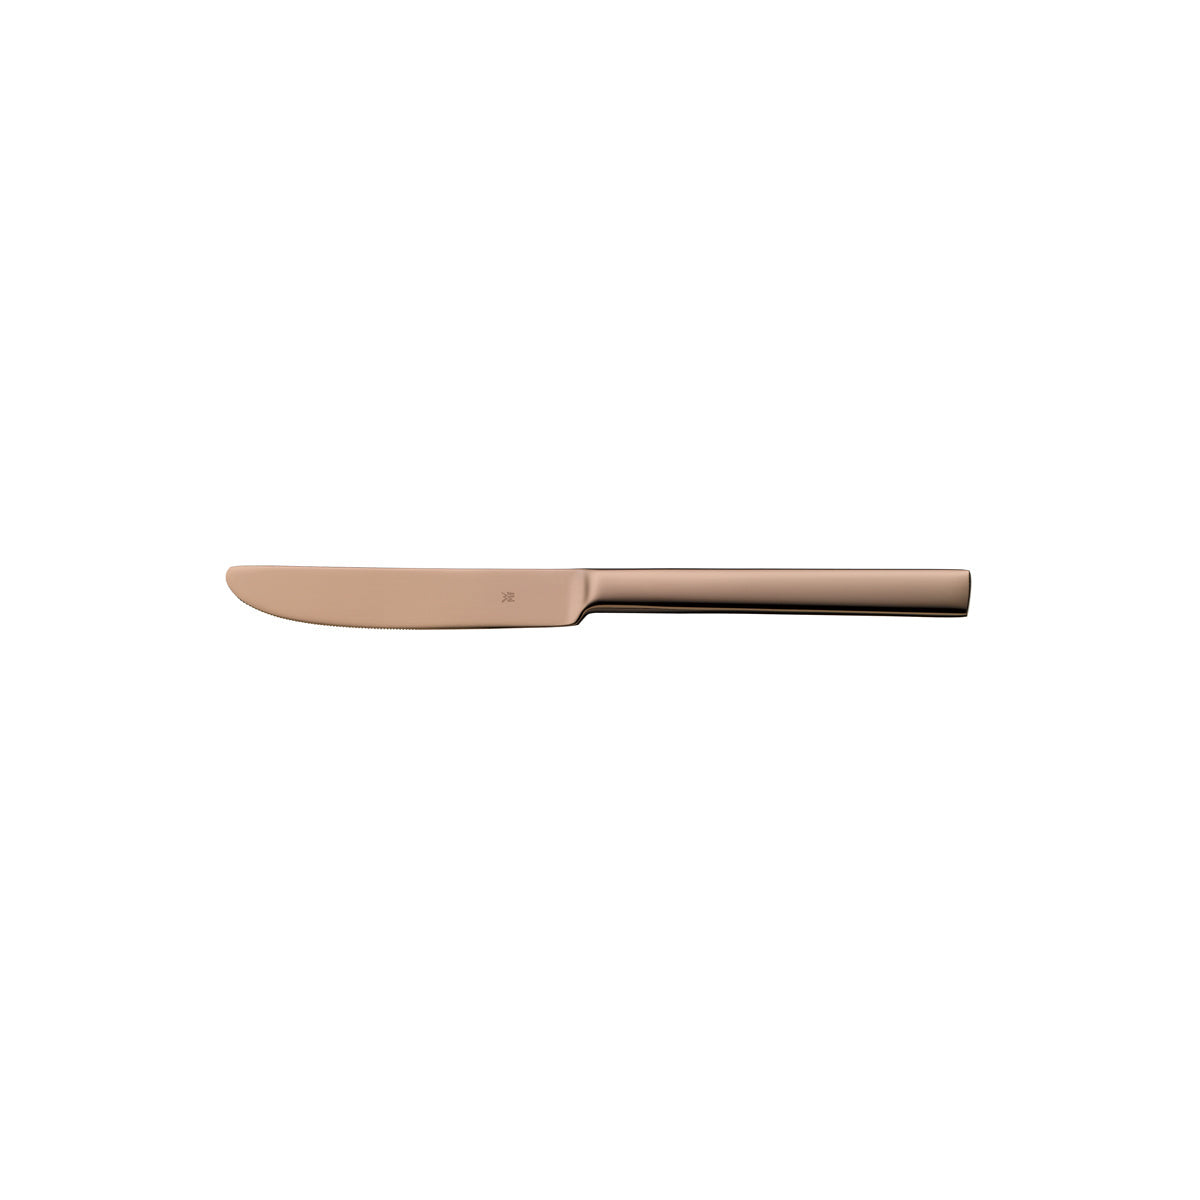 59.5303.8101 WMF Unic Table Knife - Flat Handle Copper Tomkin Australia Hospitality Supplies